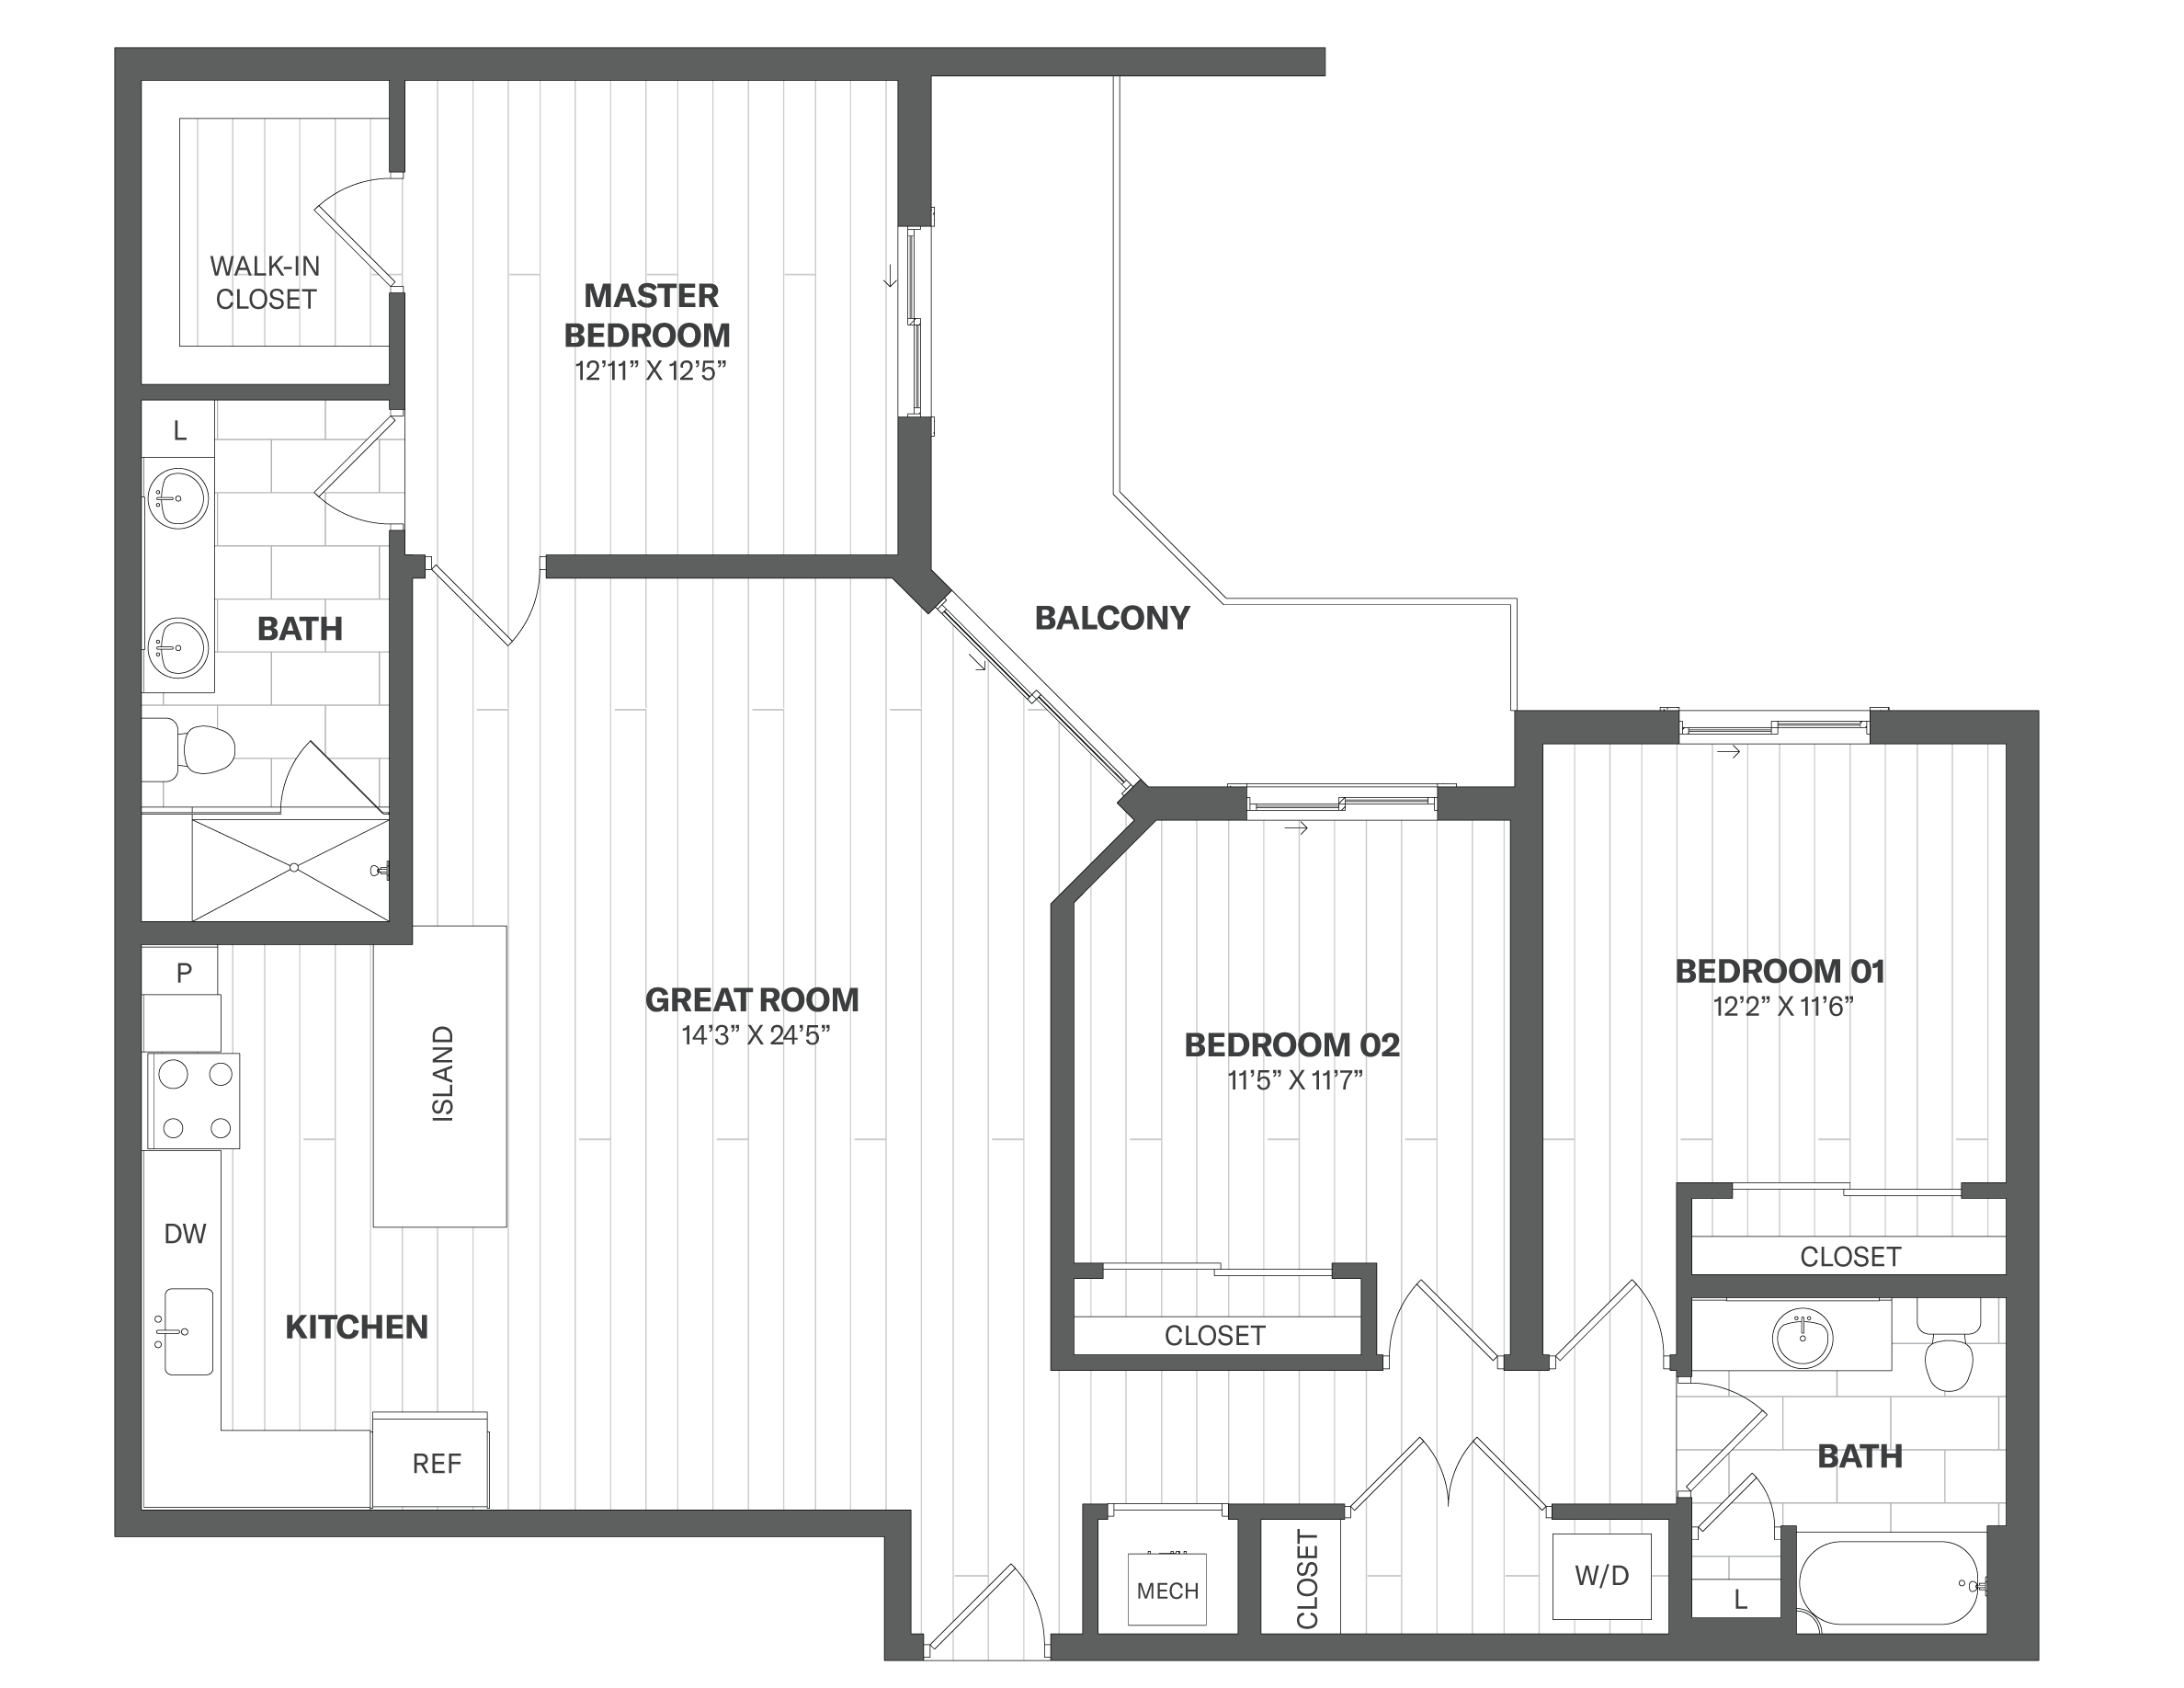 Apartment 417 floorplan